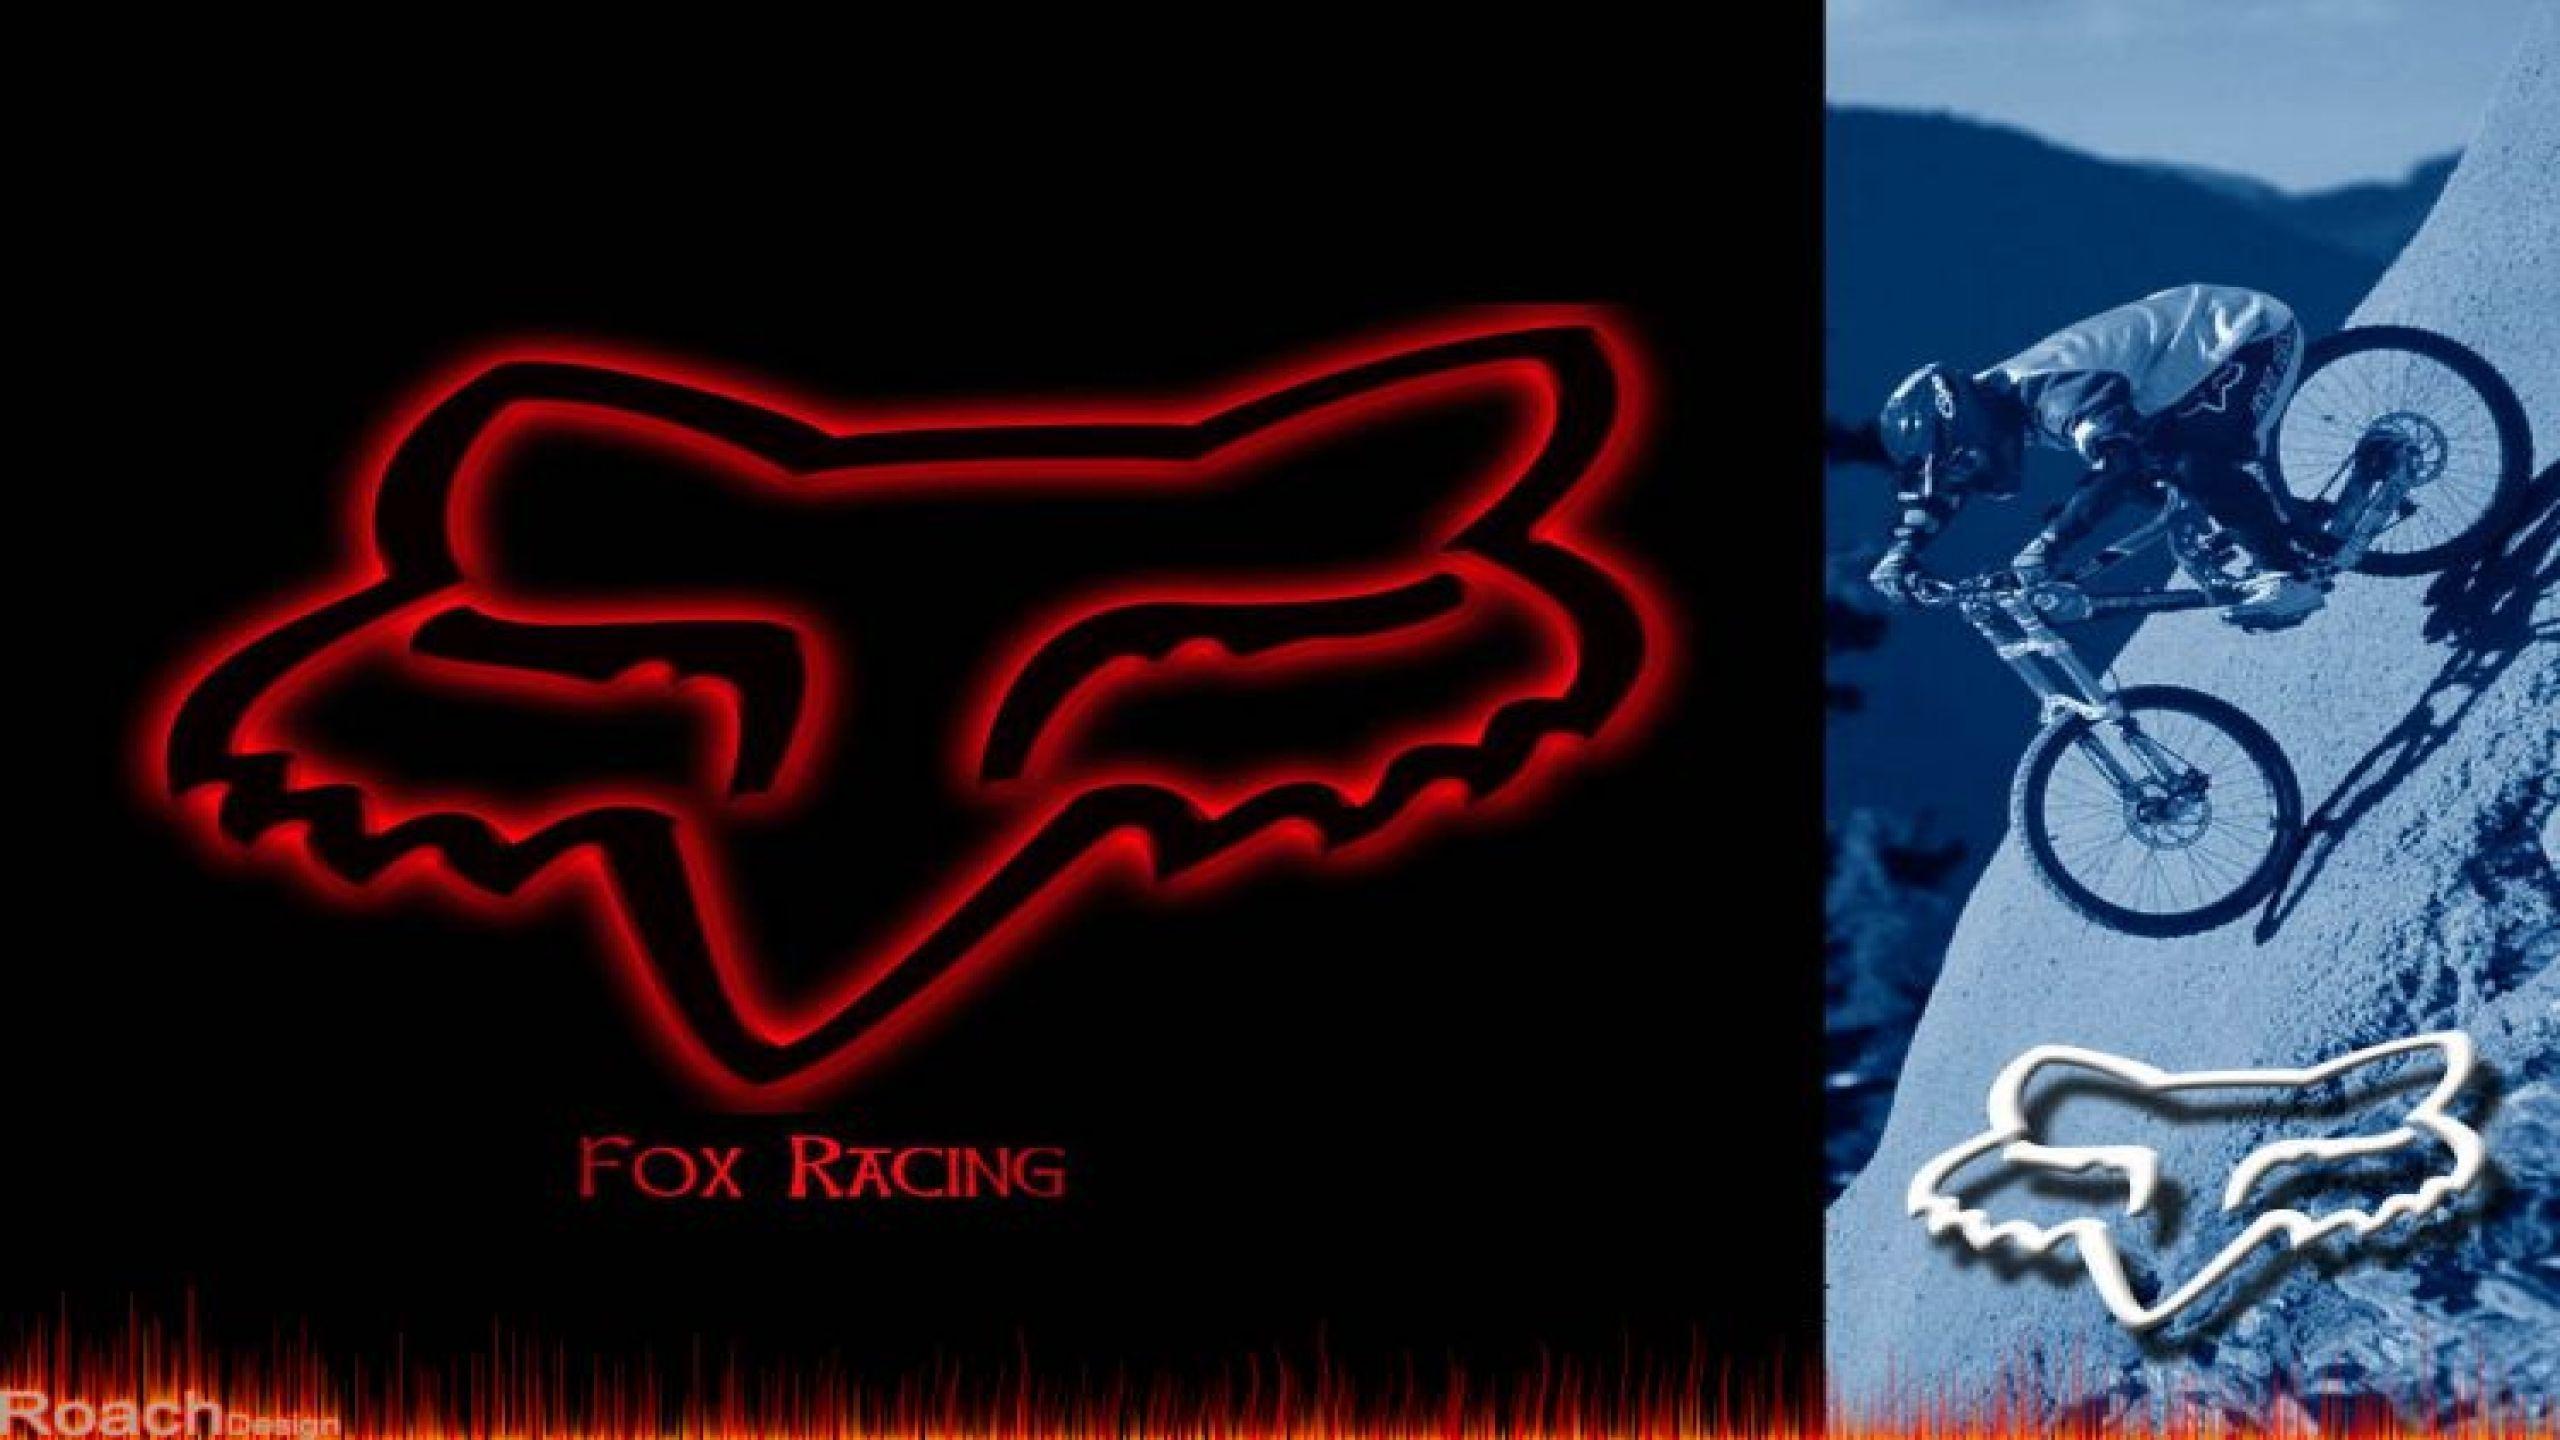 Fox Racing Wallpaper HD. Wallpaper, Background, Image, Art